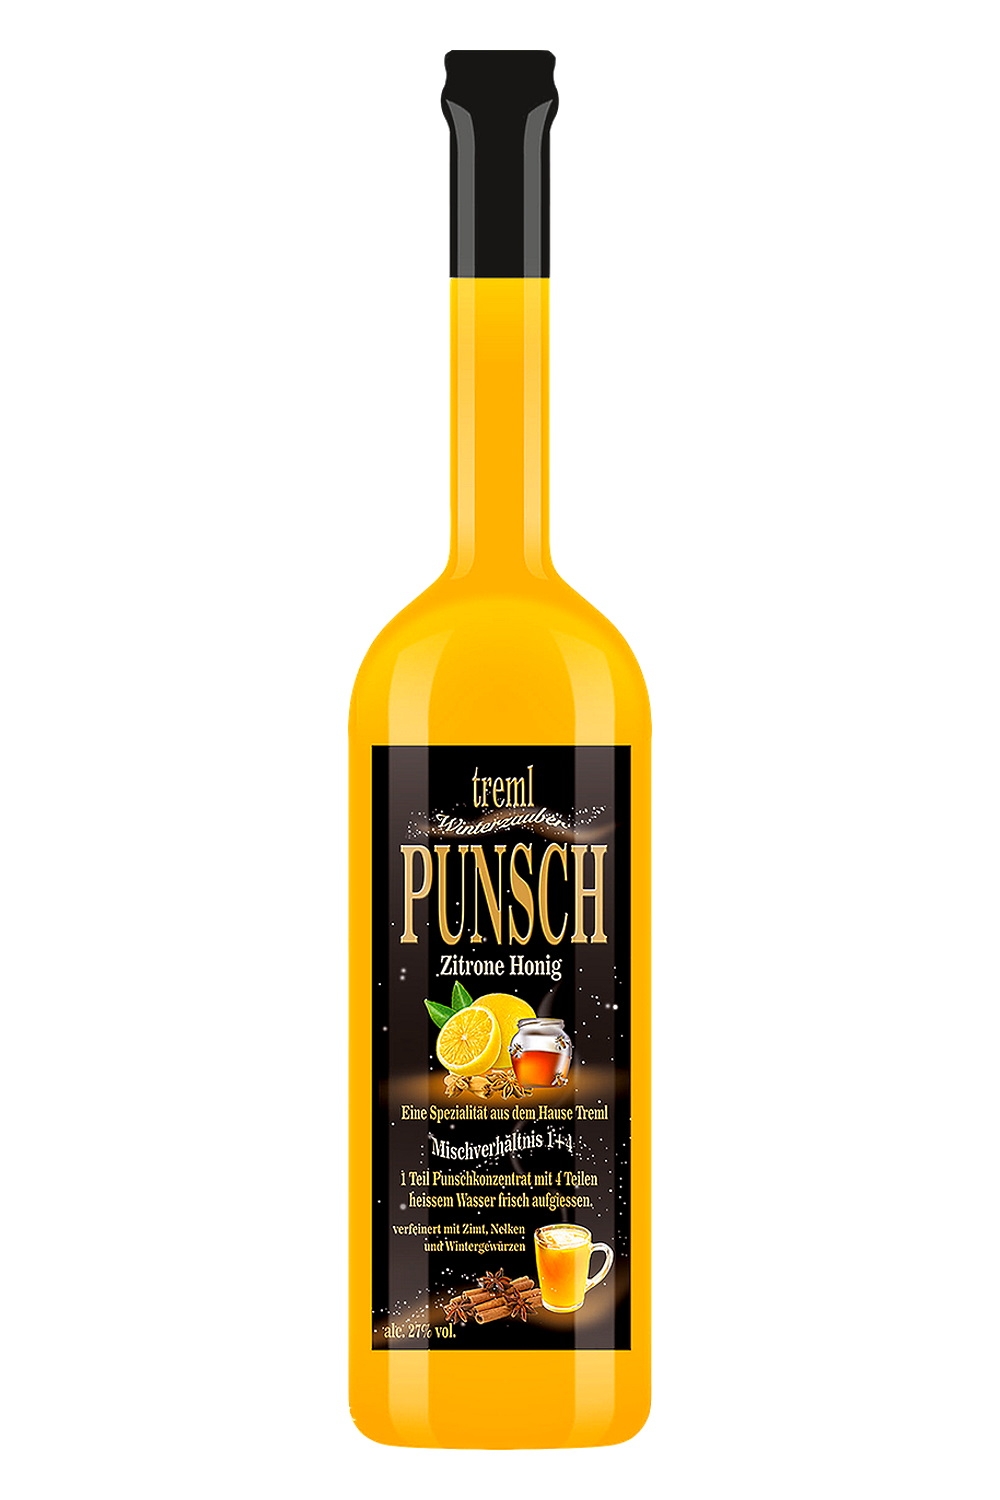 Punsch Zitrone-Honig 27% vol. Treml Punsch | Karadarshop.com